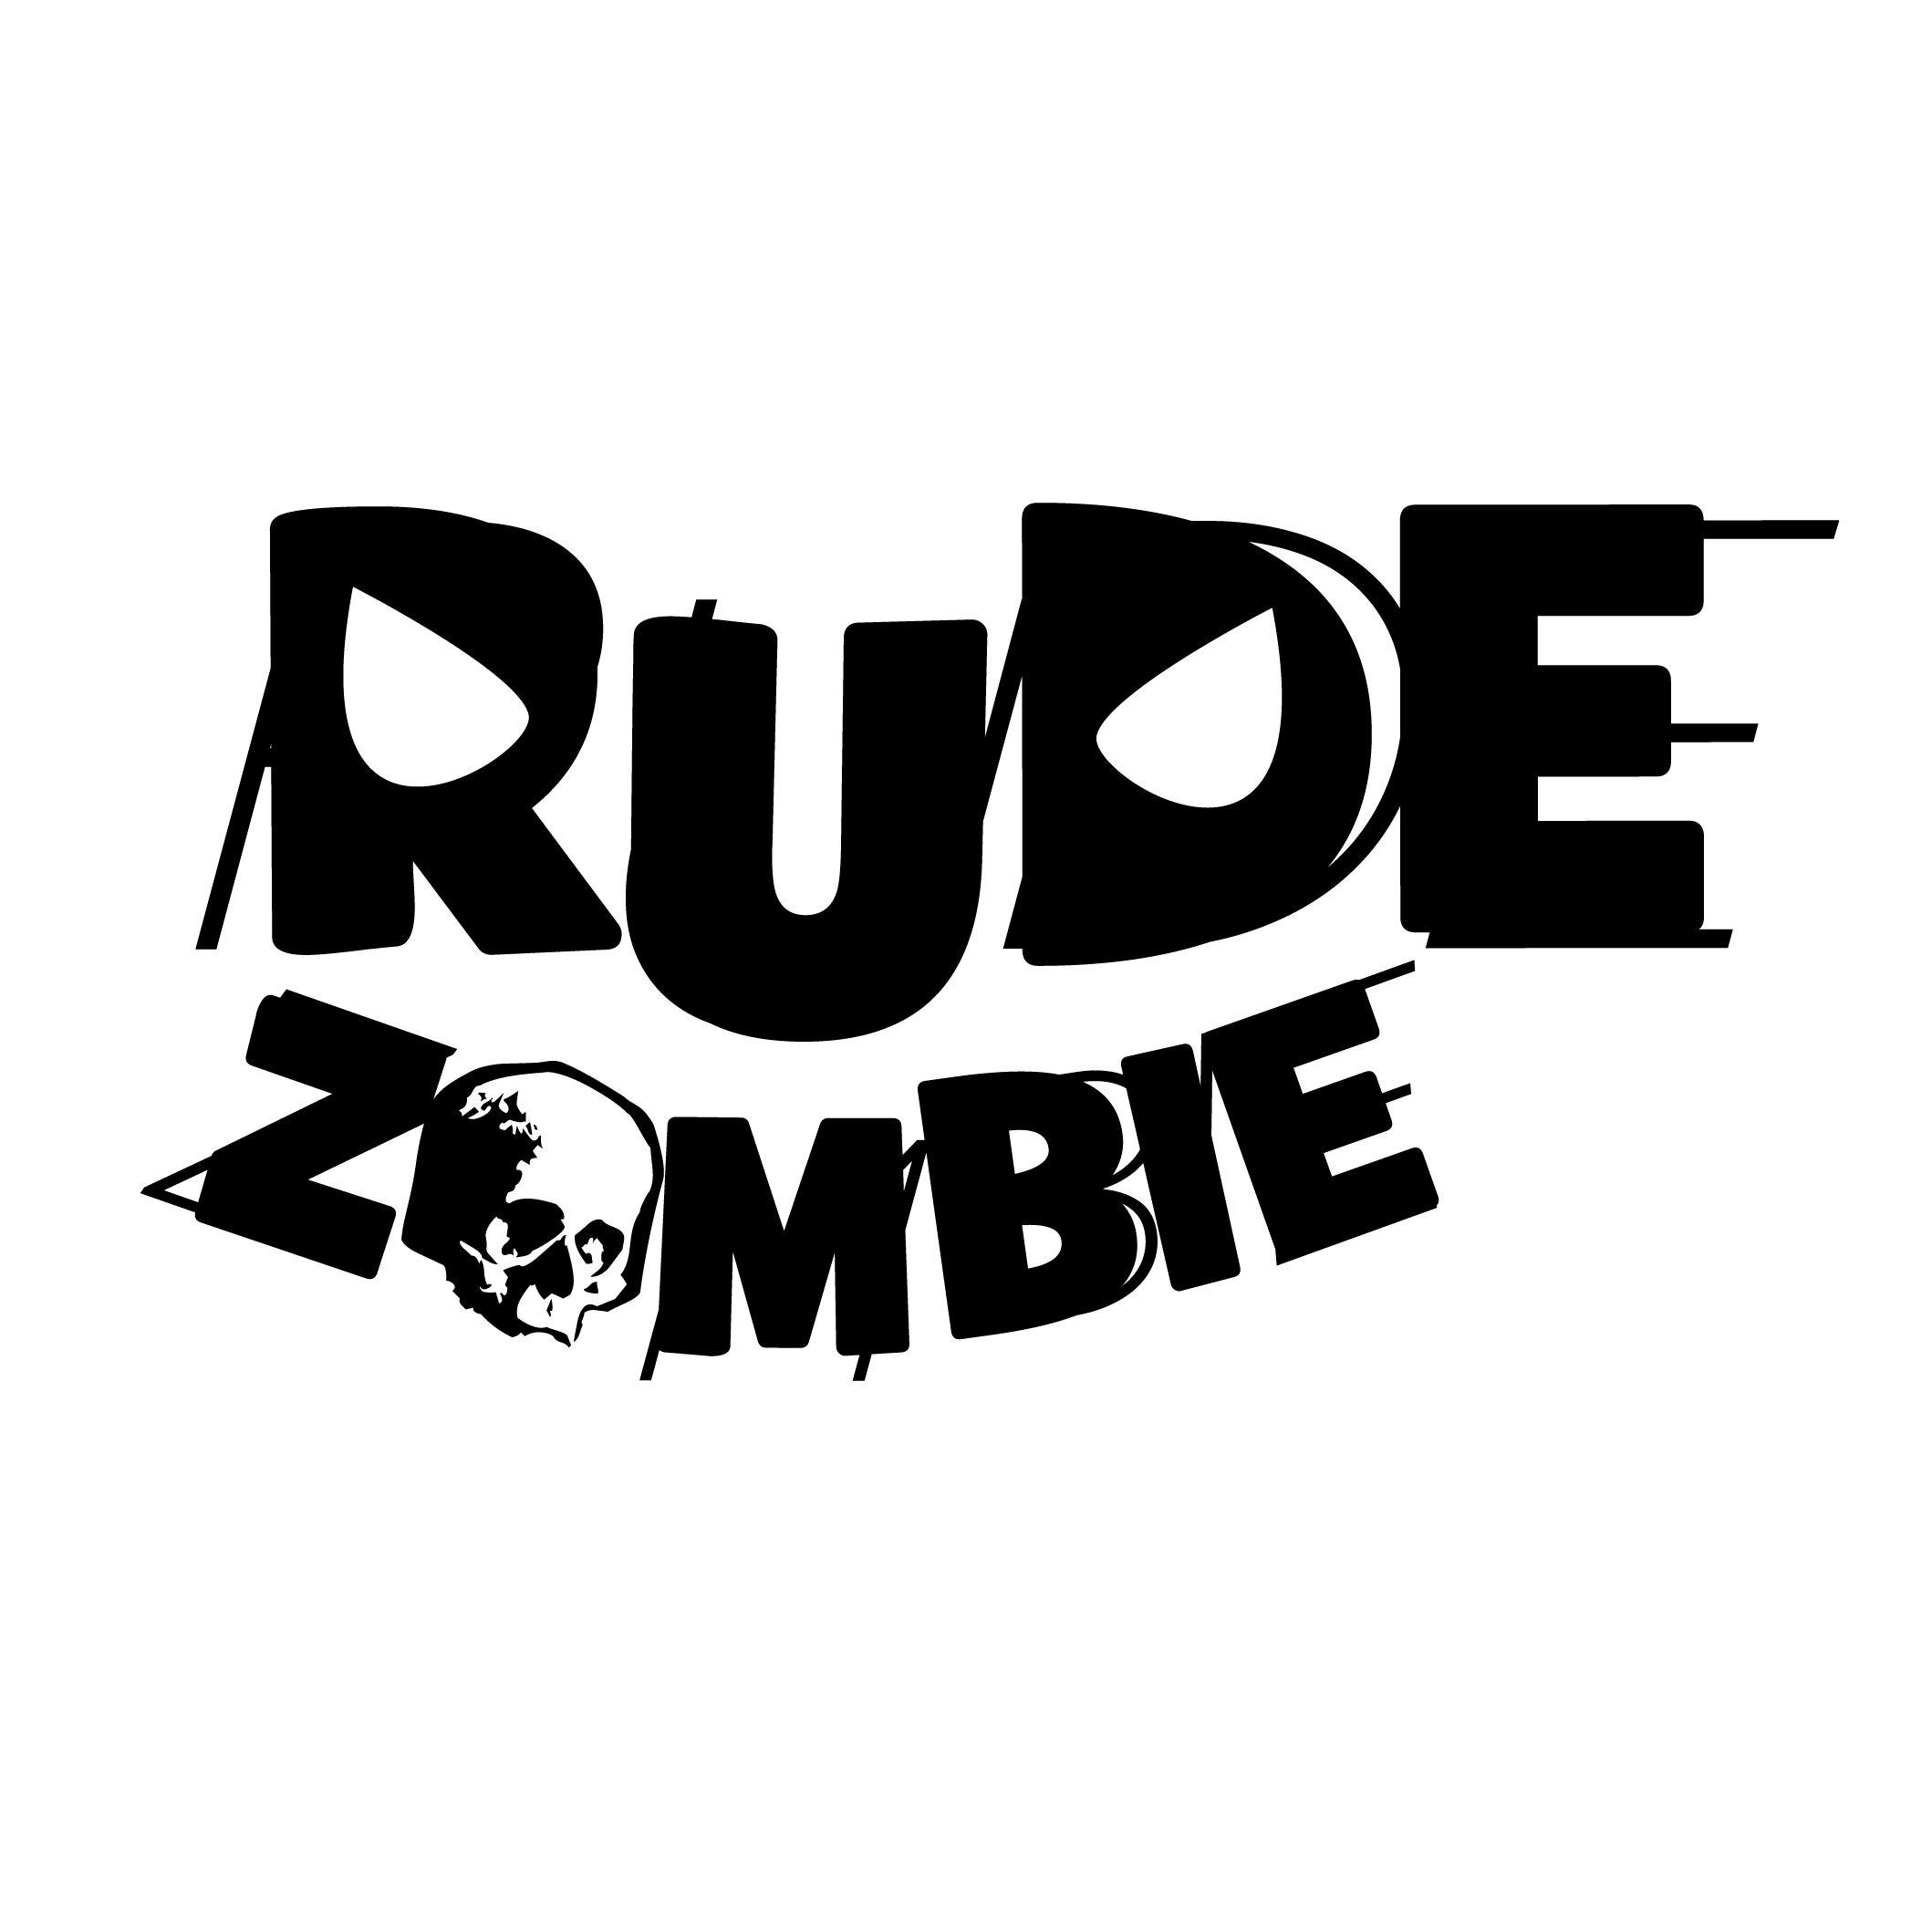 Rude Logo - Rude Zombie logo | Hello, I'm Dennis.